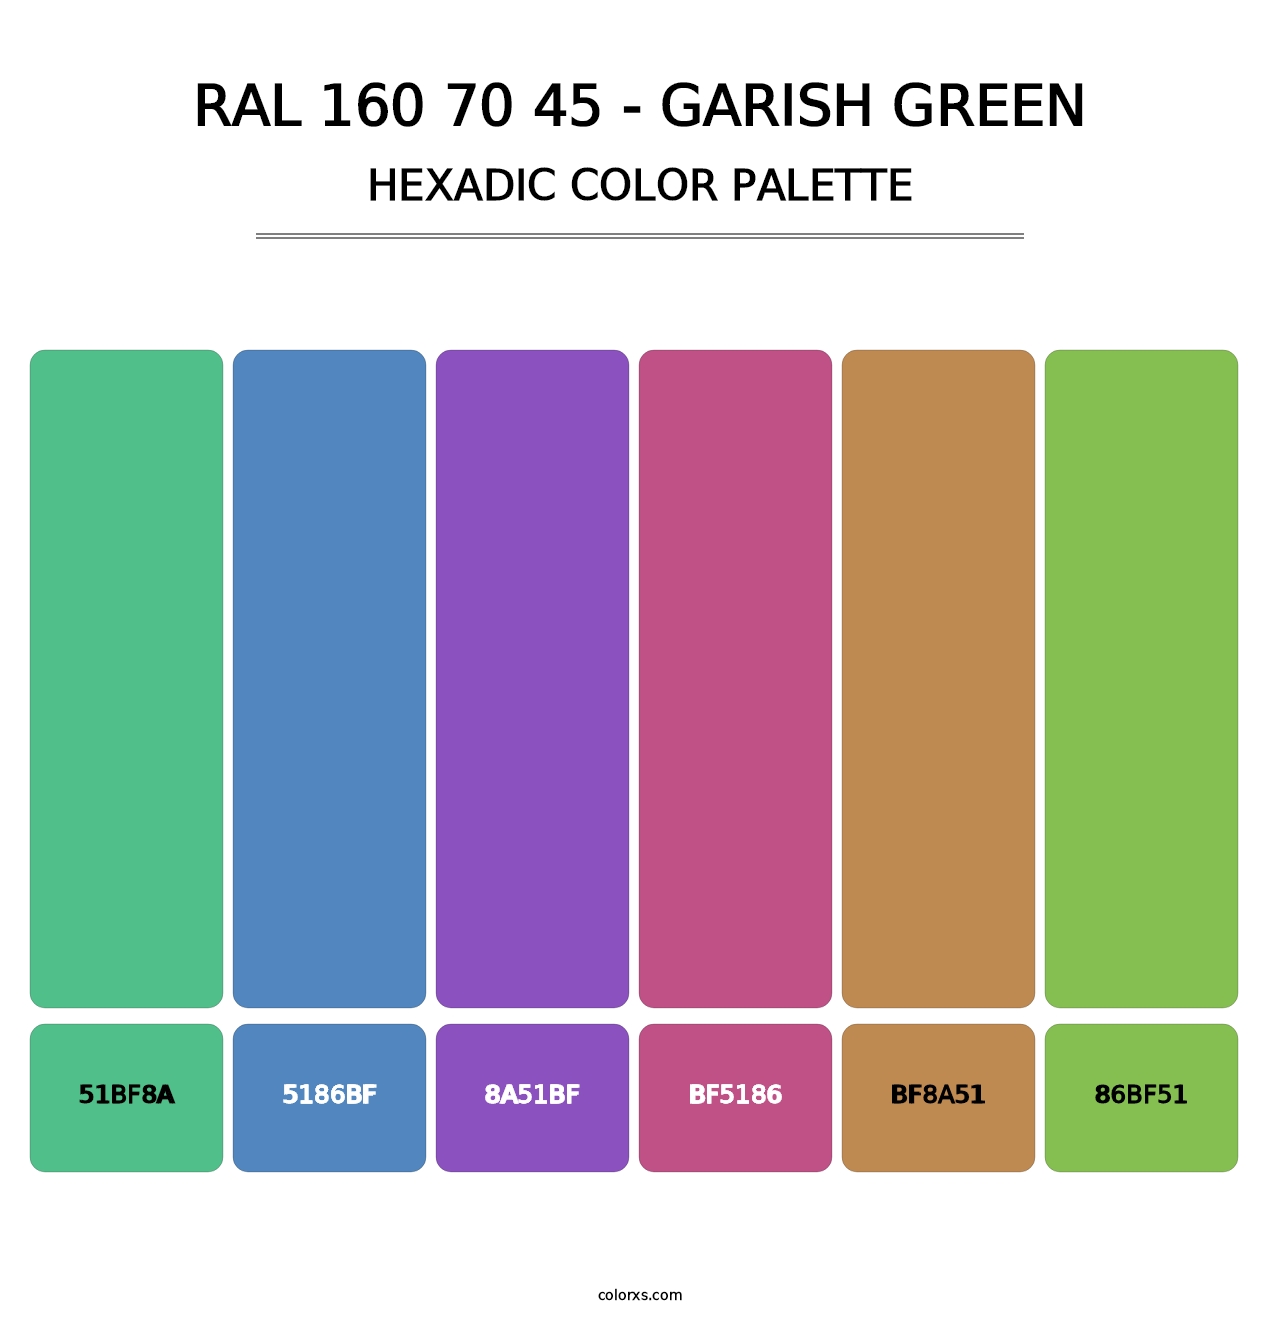 RAL 160 70 45 - Garish Green - Hexadic Color Palette